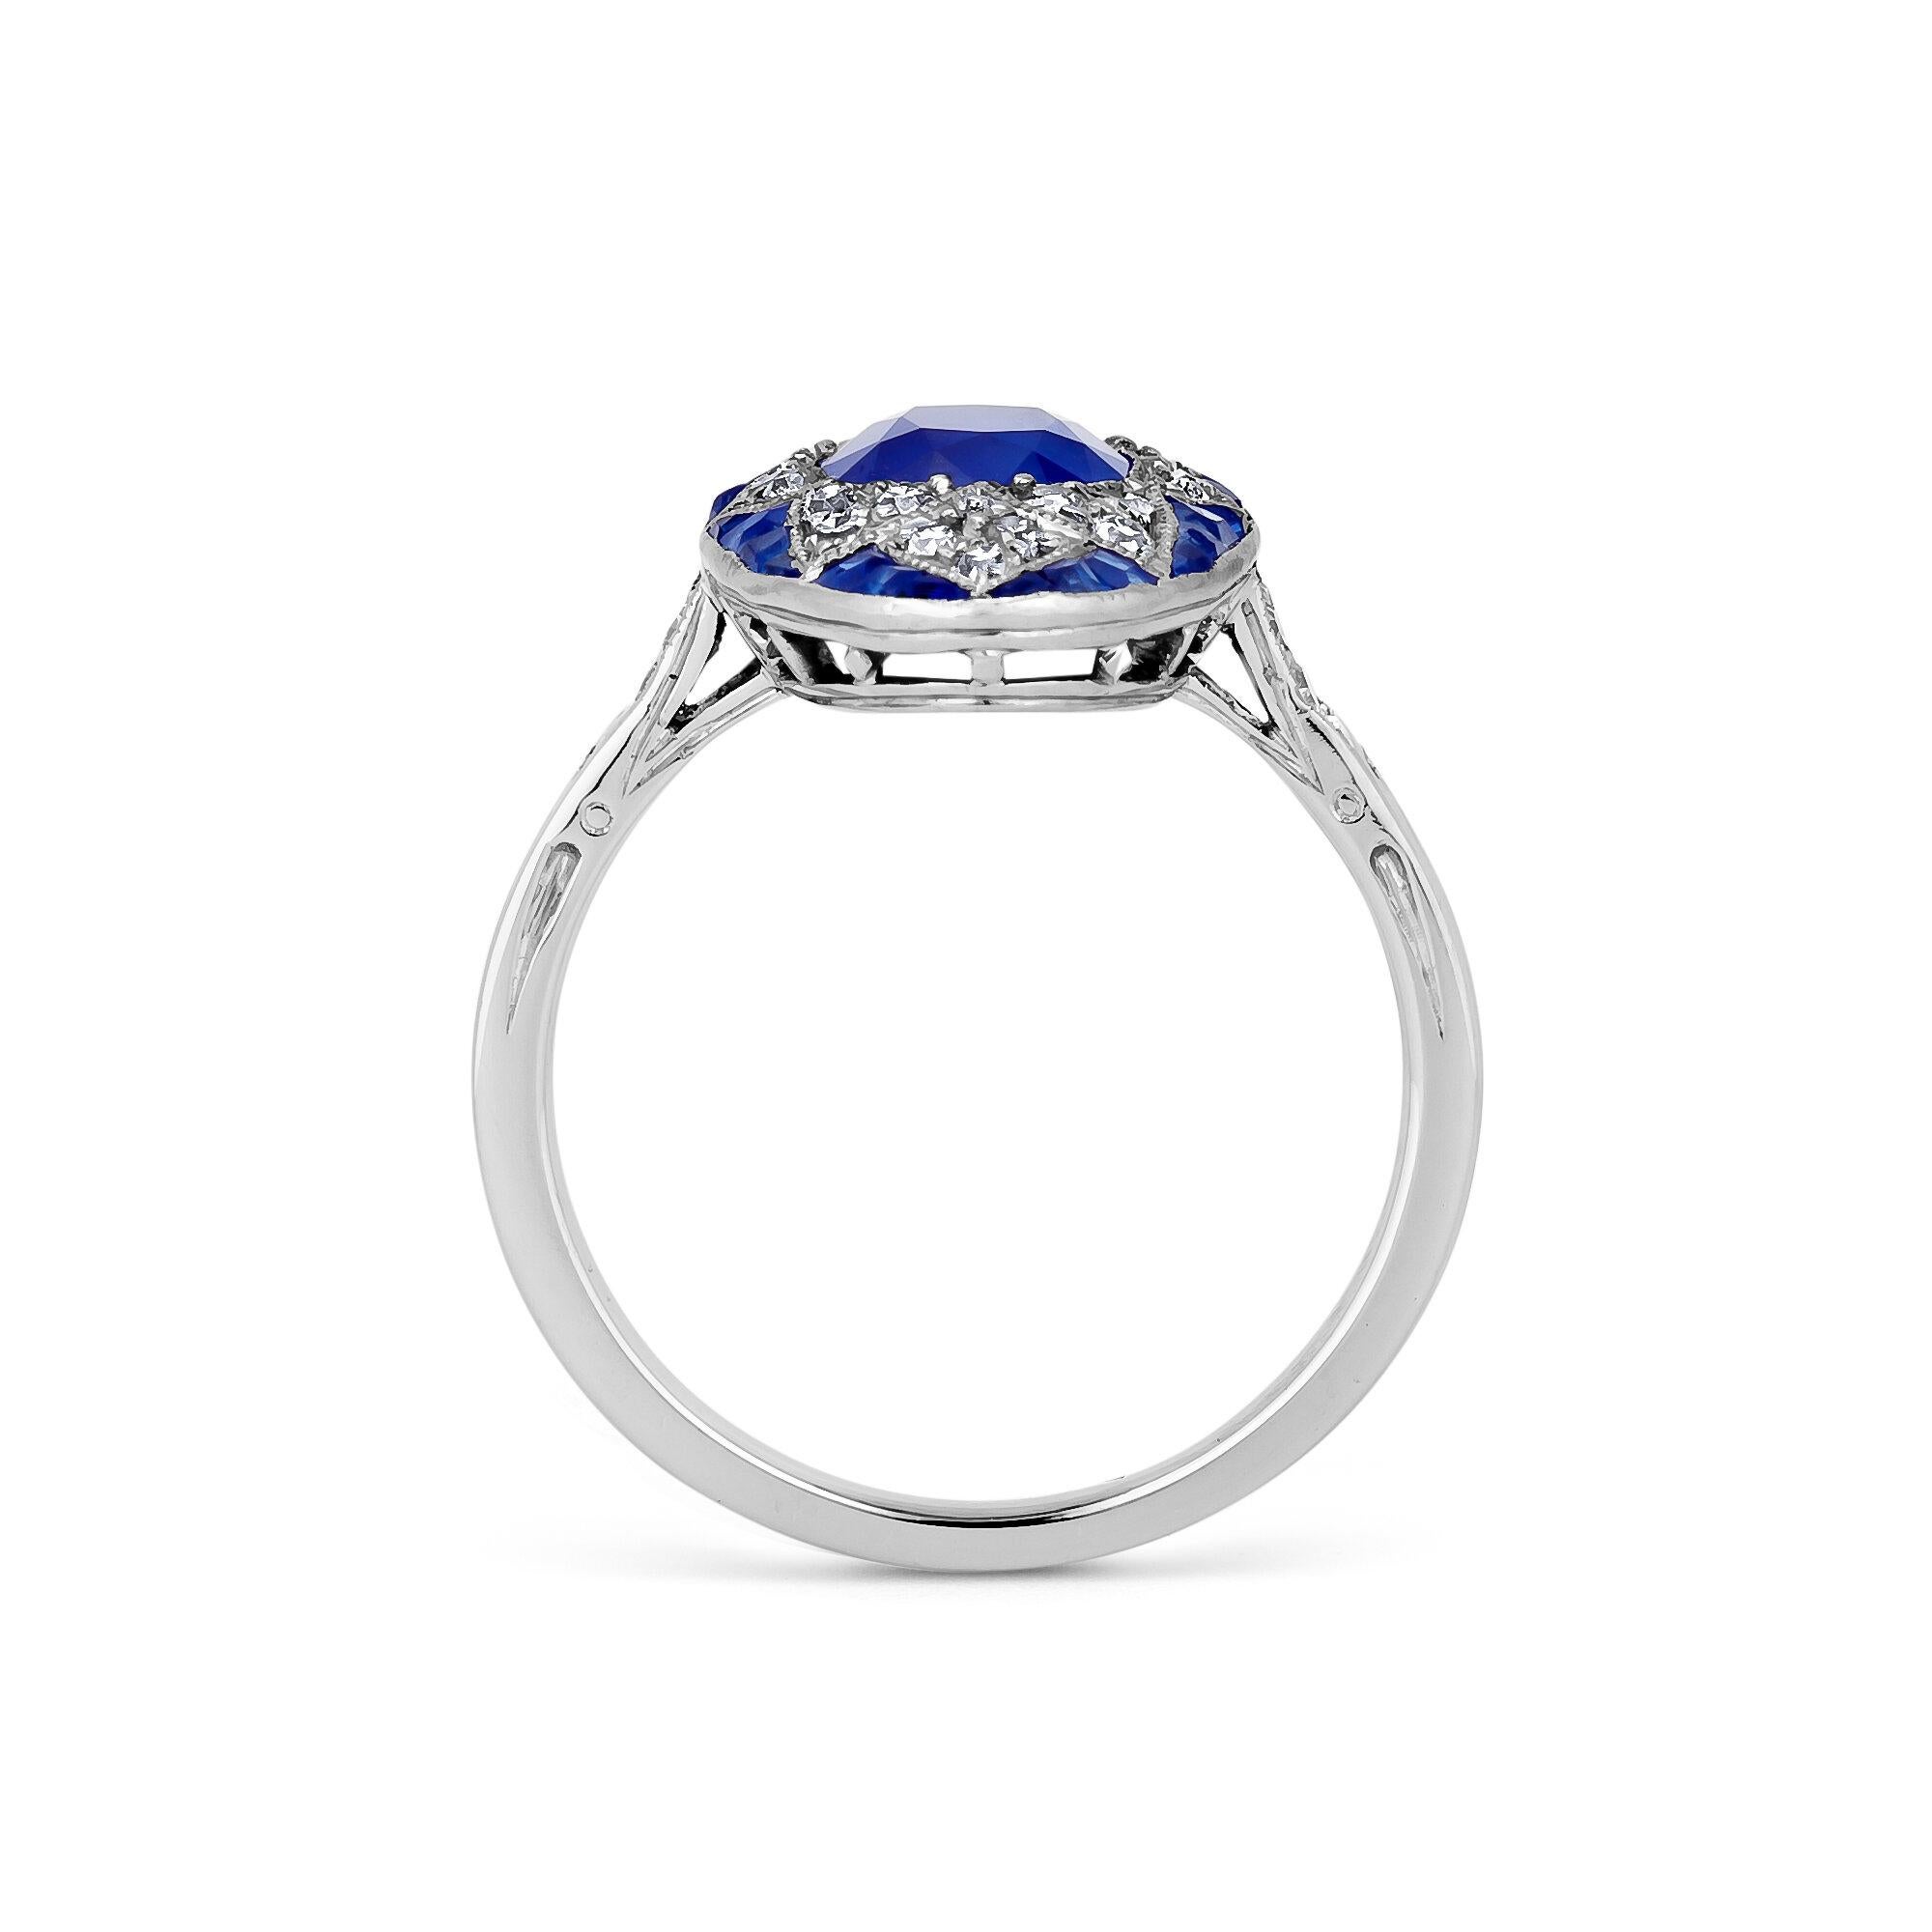 Cushion Cut Art Deco AGL Certified 1.84 Carat Kashmir Natural Sapphire Diamond Platinum Ring